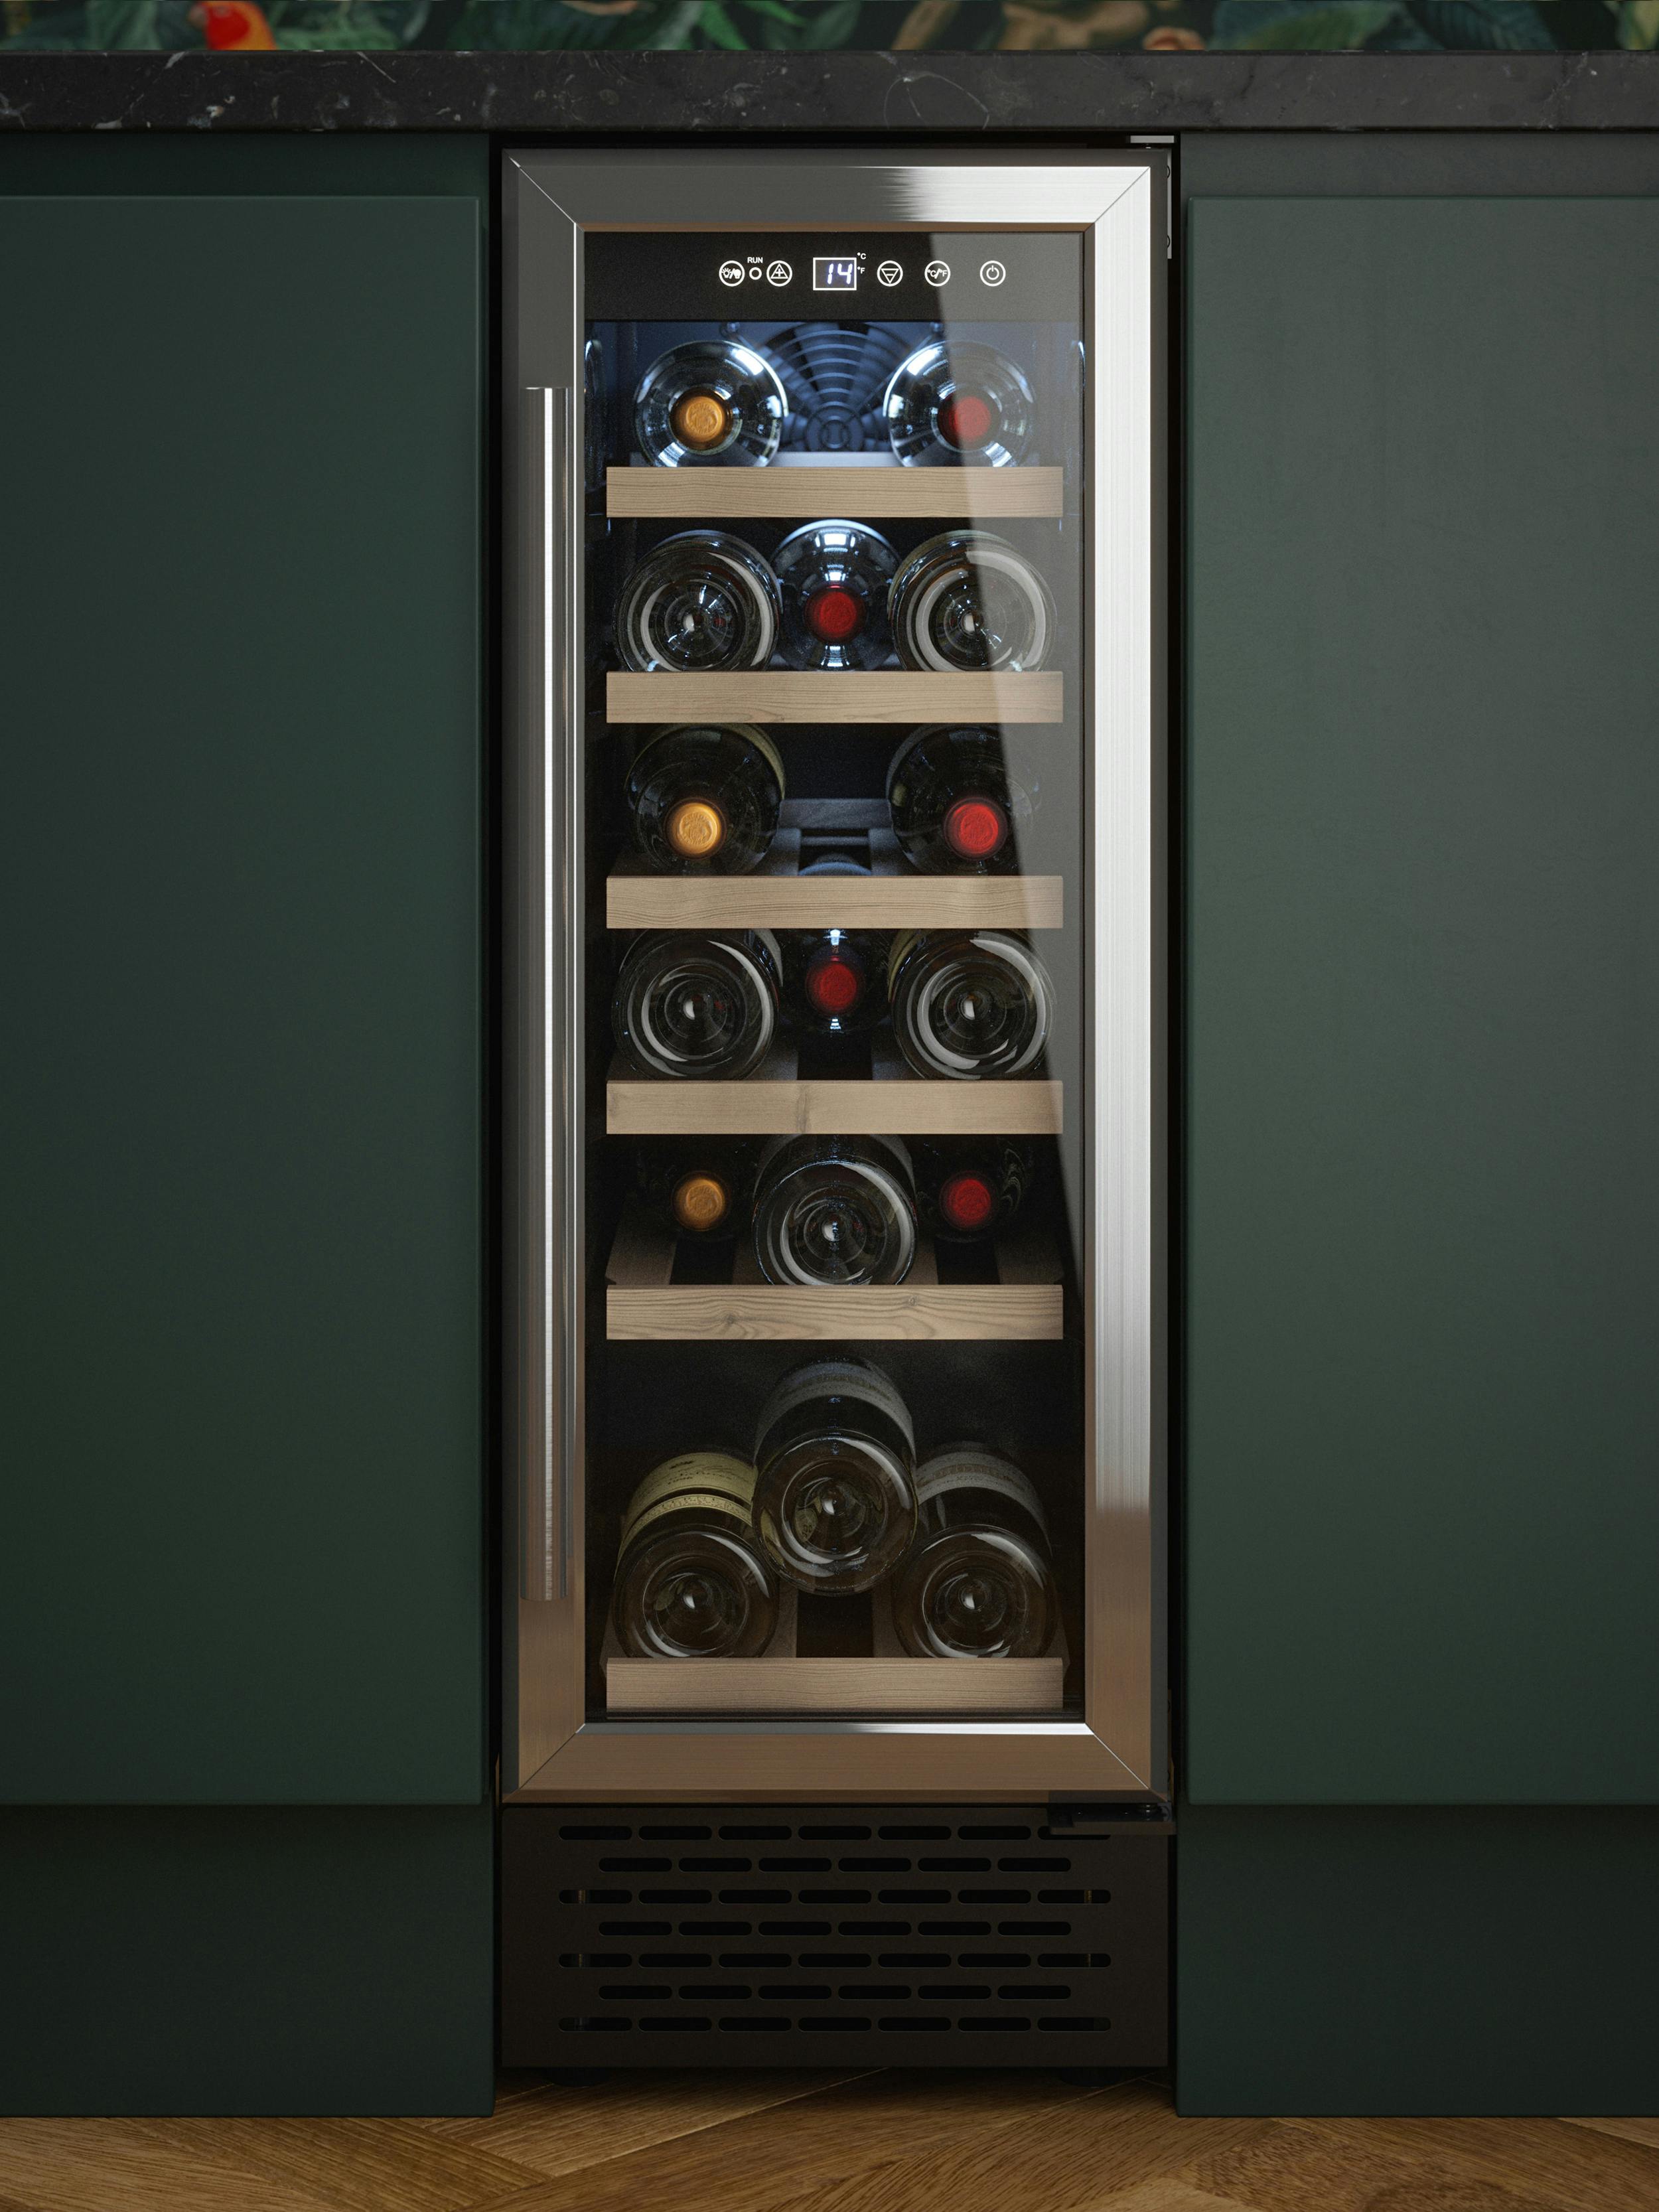 EDESA 30cm Stainless Steel Wine Cooler